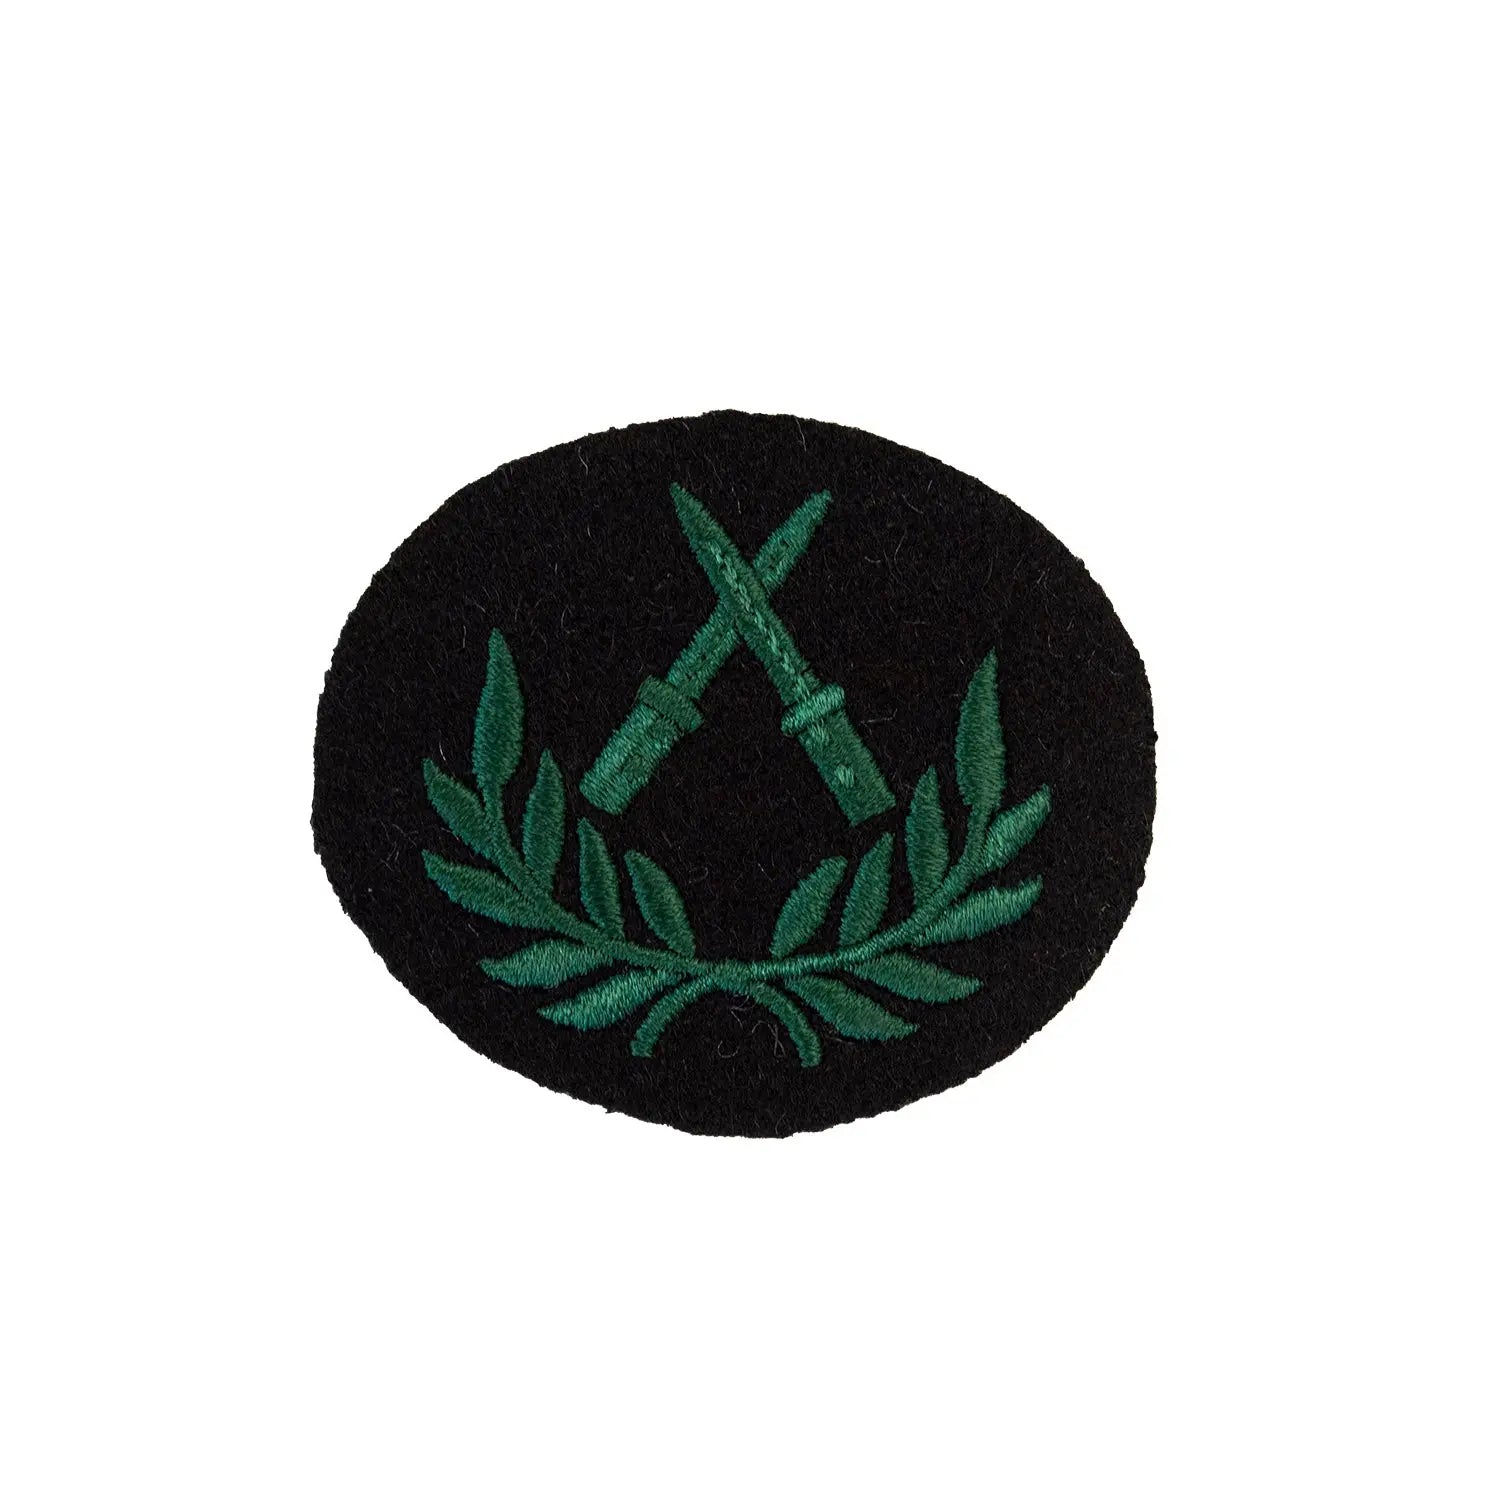 Platoon Commanders Battle Course (PCBC) Infantry Regiments British Army Badge wyedean